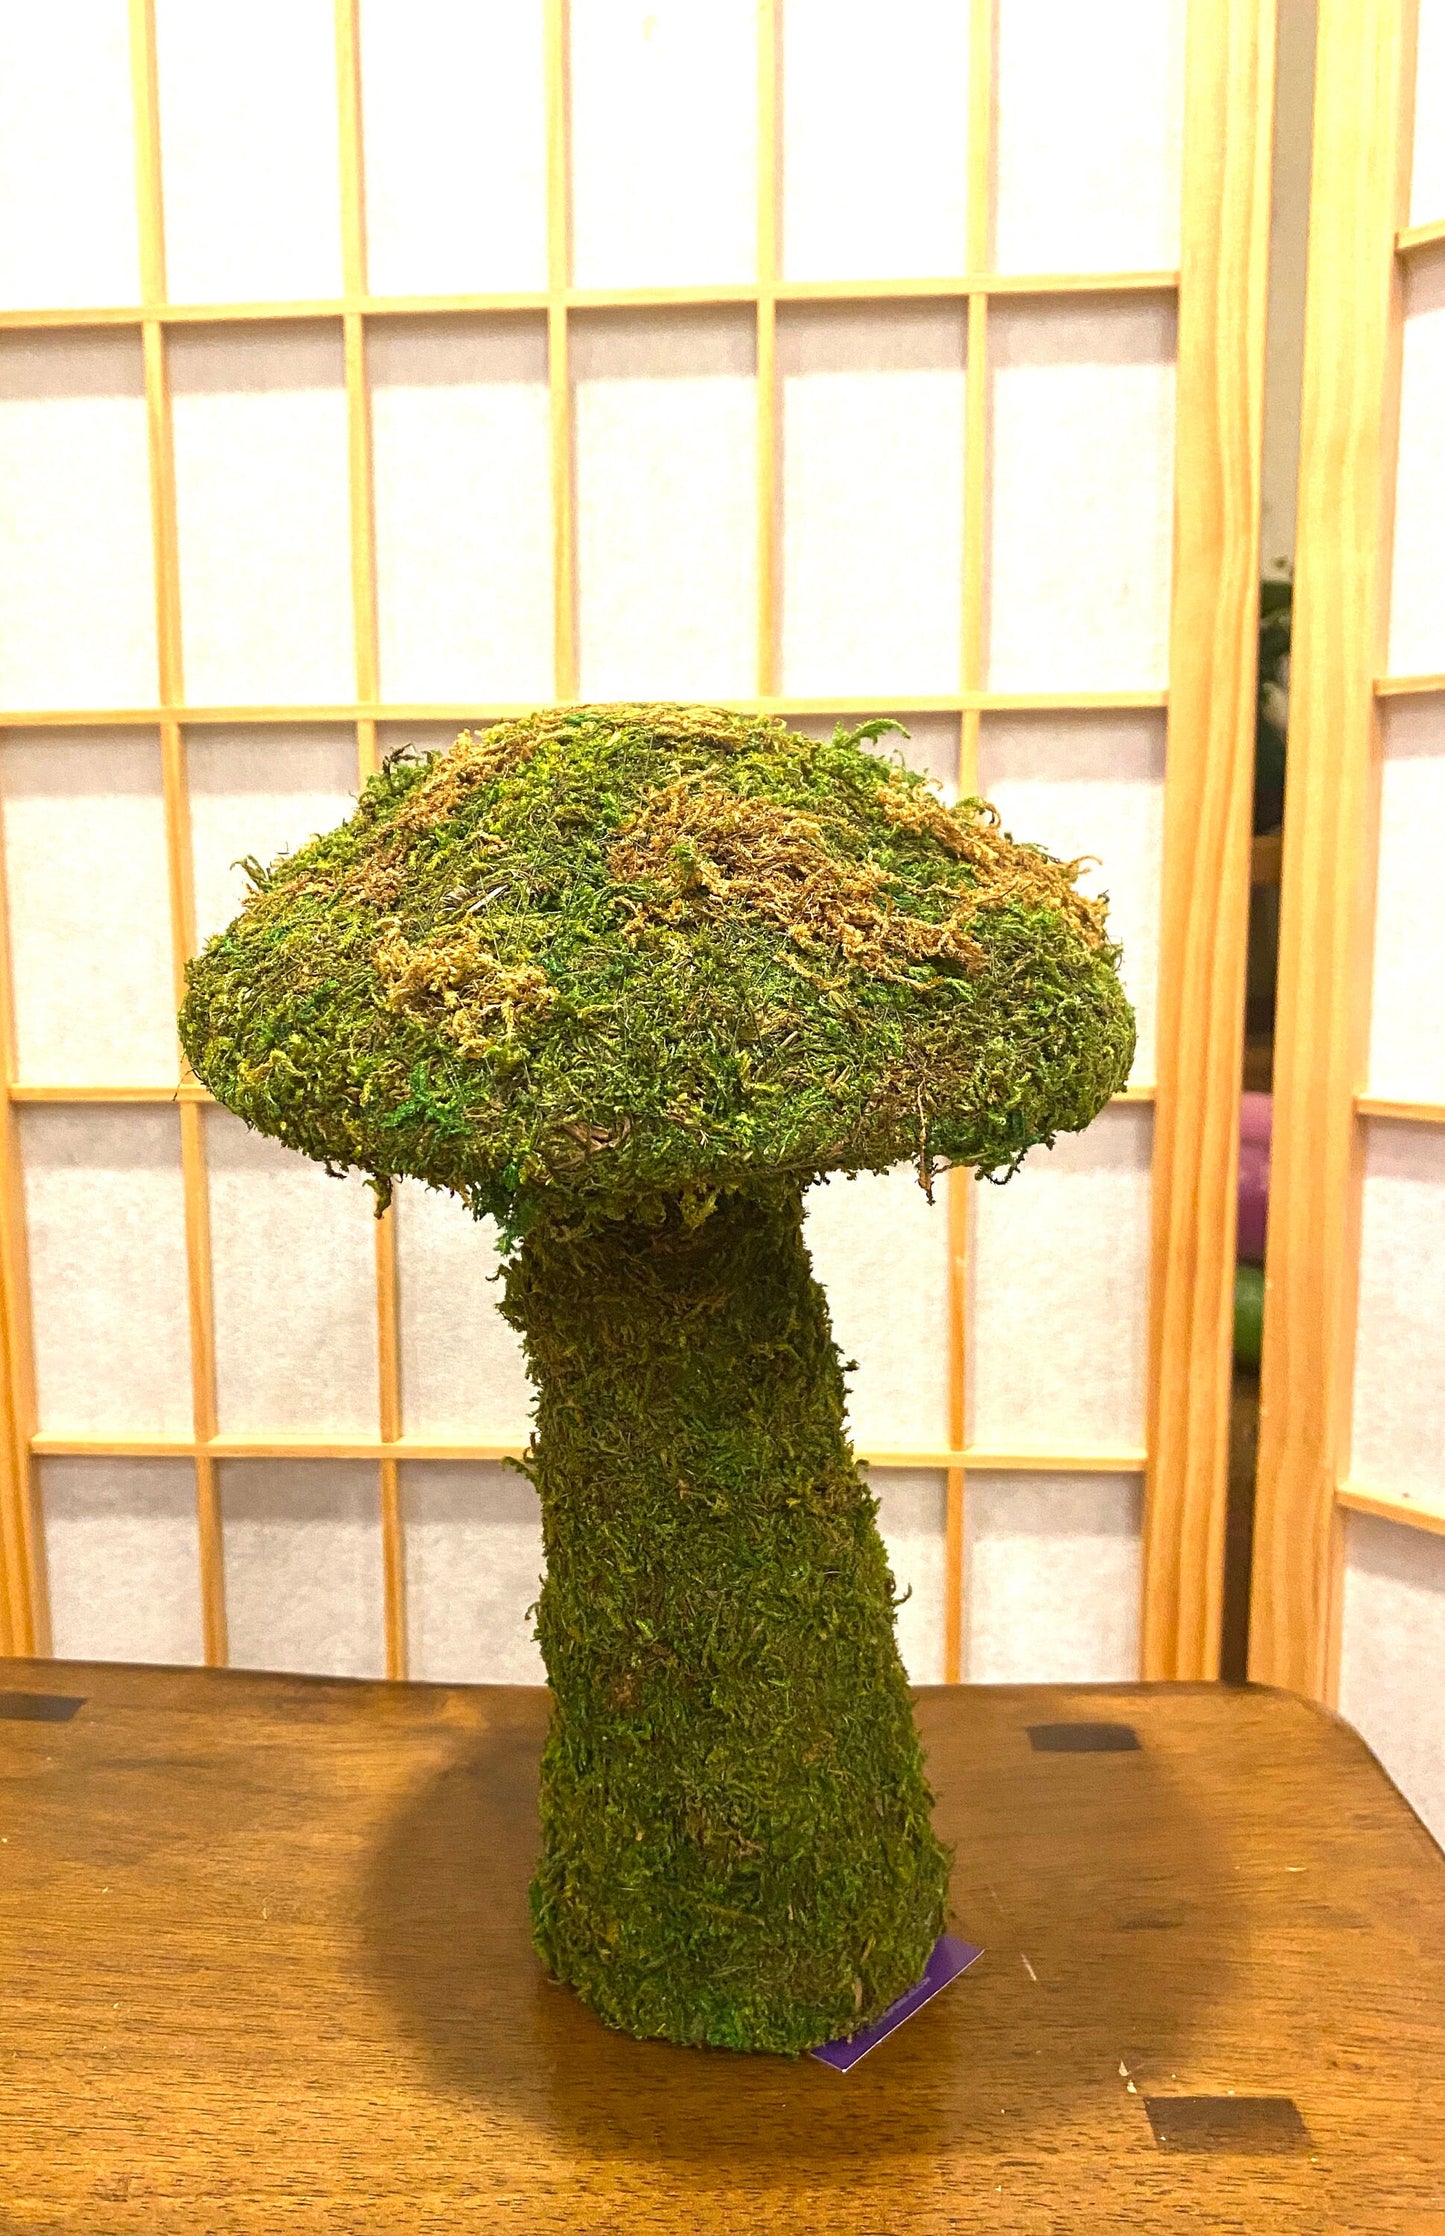 Mushroom deco garden, cute mushroom shape covered with preserved fresh green colored moss